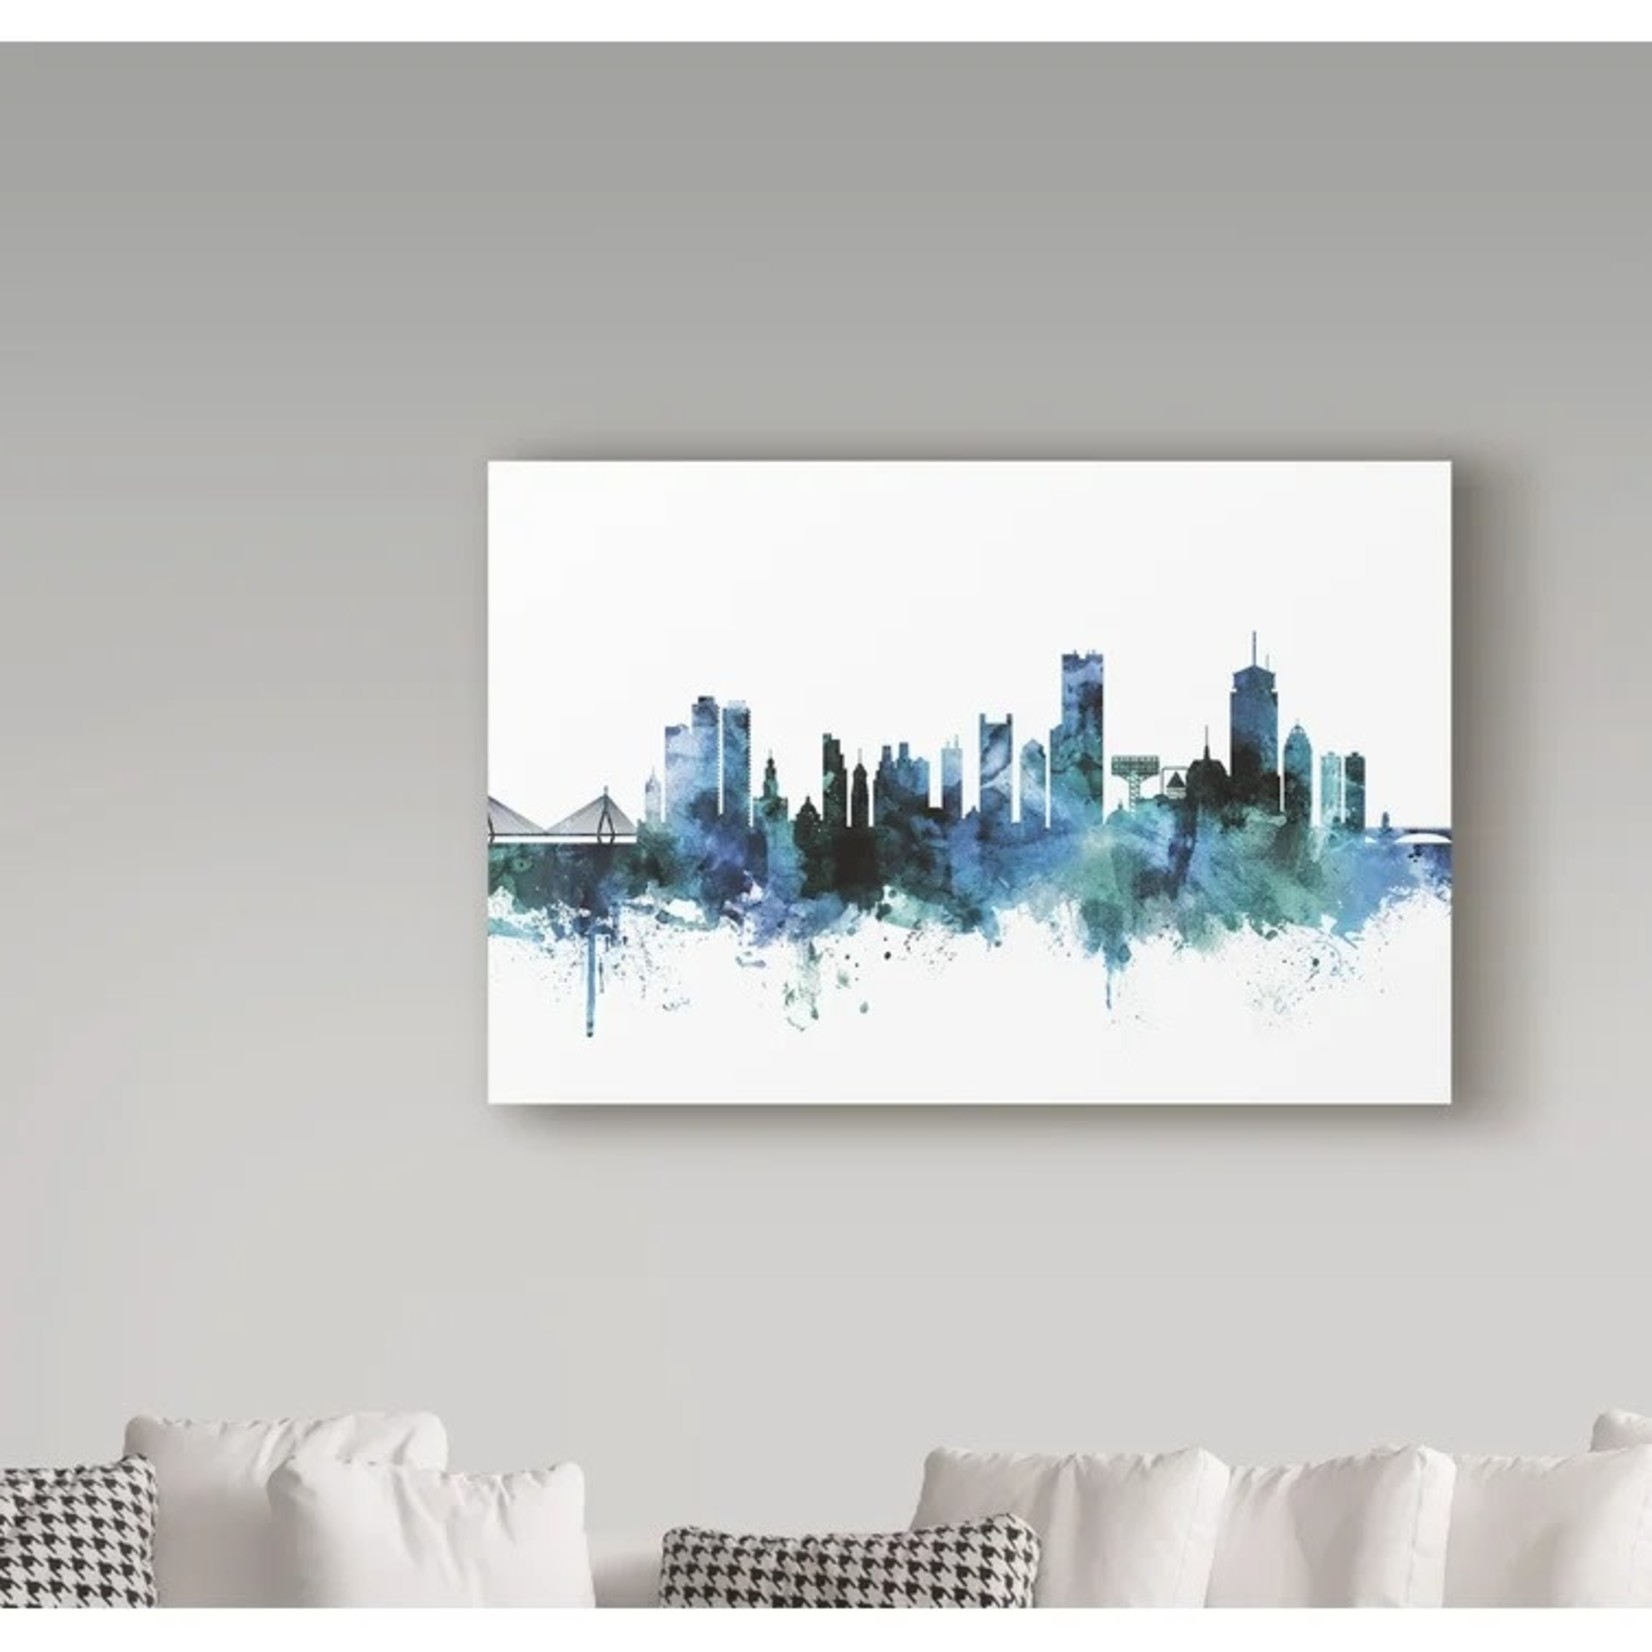 *47" x 30" 'Boston Massachusetts Blue Teal Skyline' Graphic Art Print on Wrapped Canvas